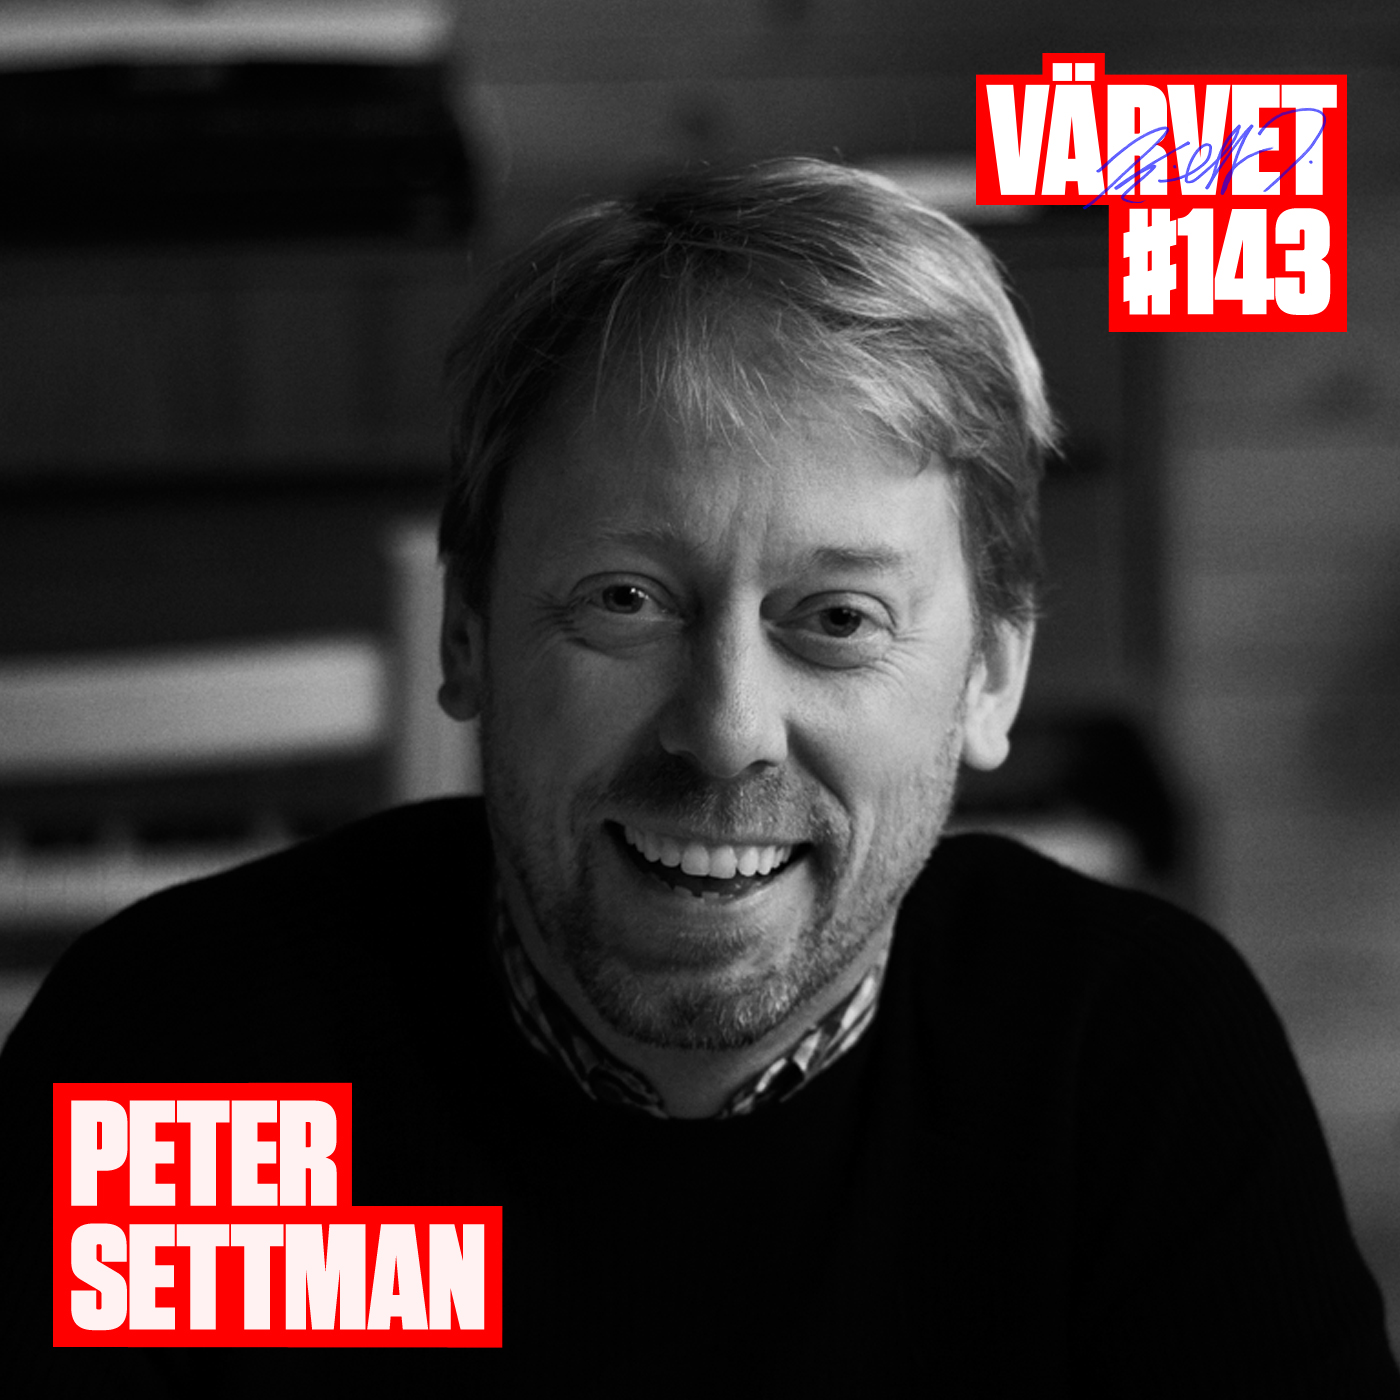 #143: Peter Settman